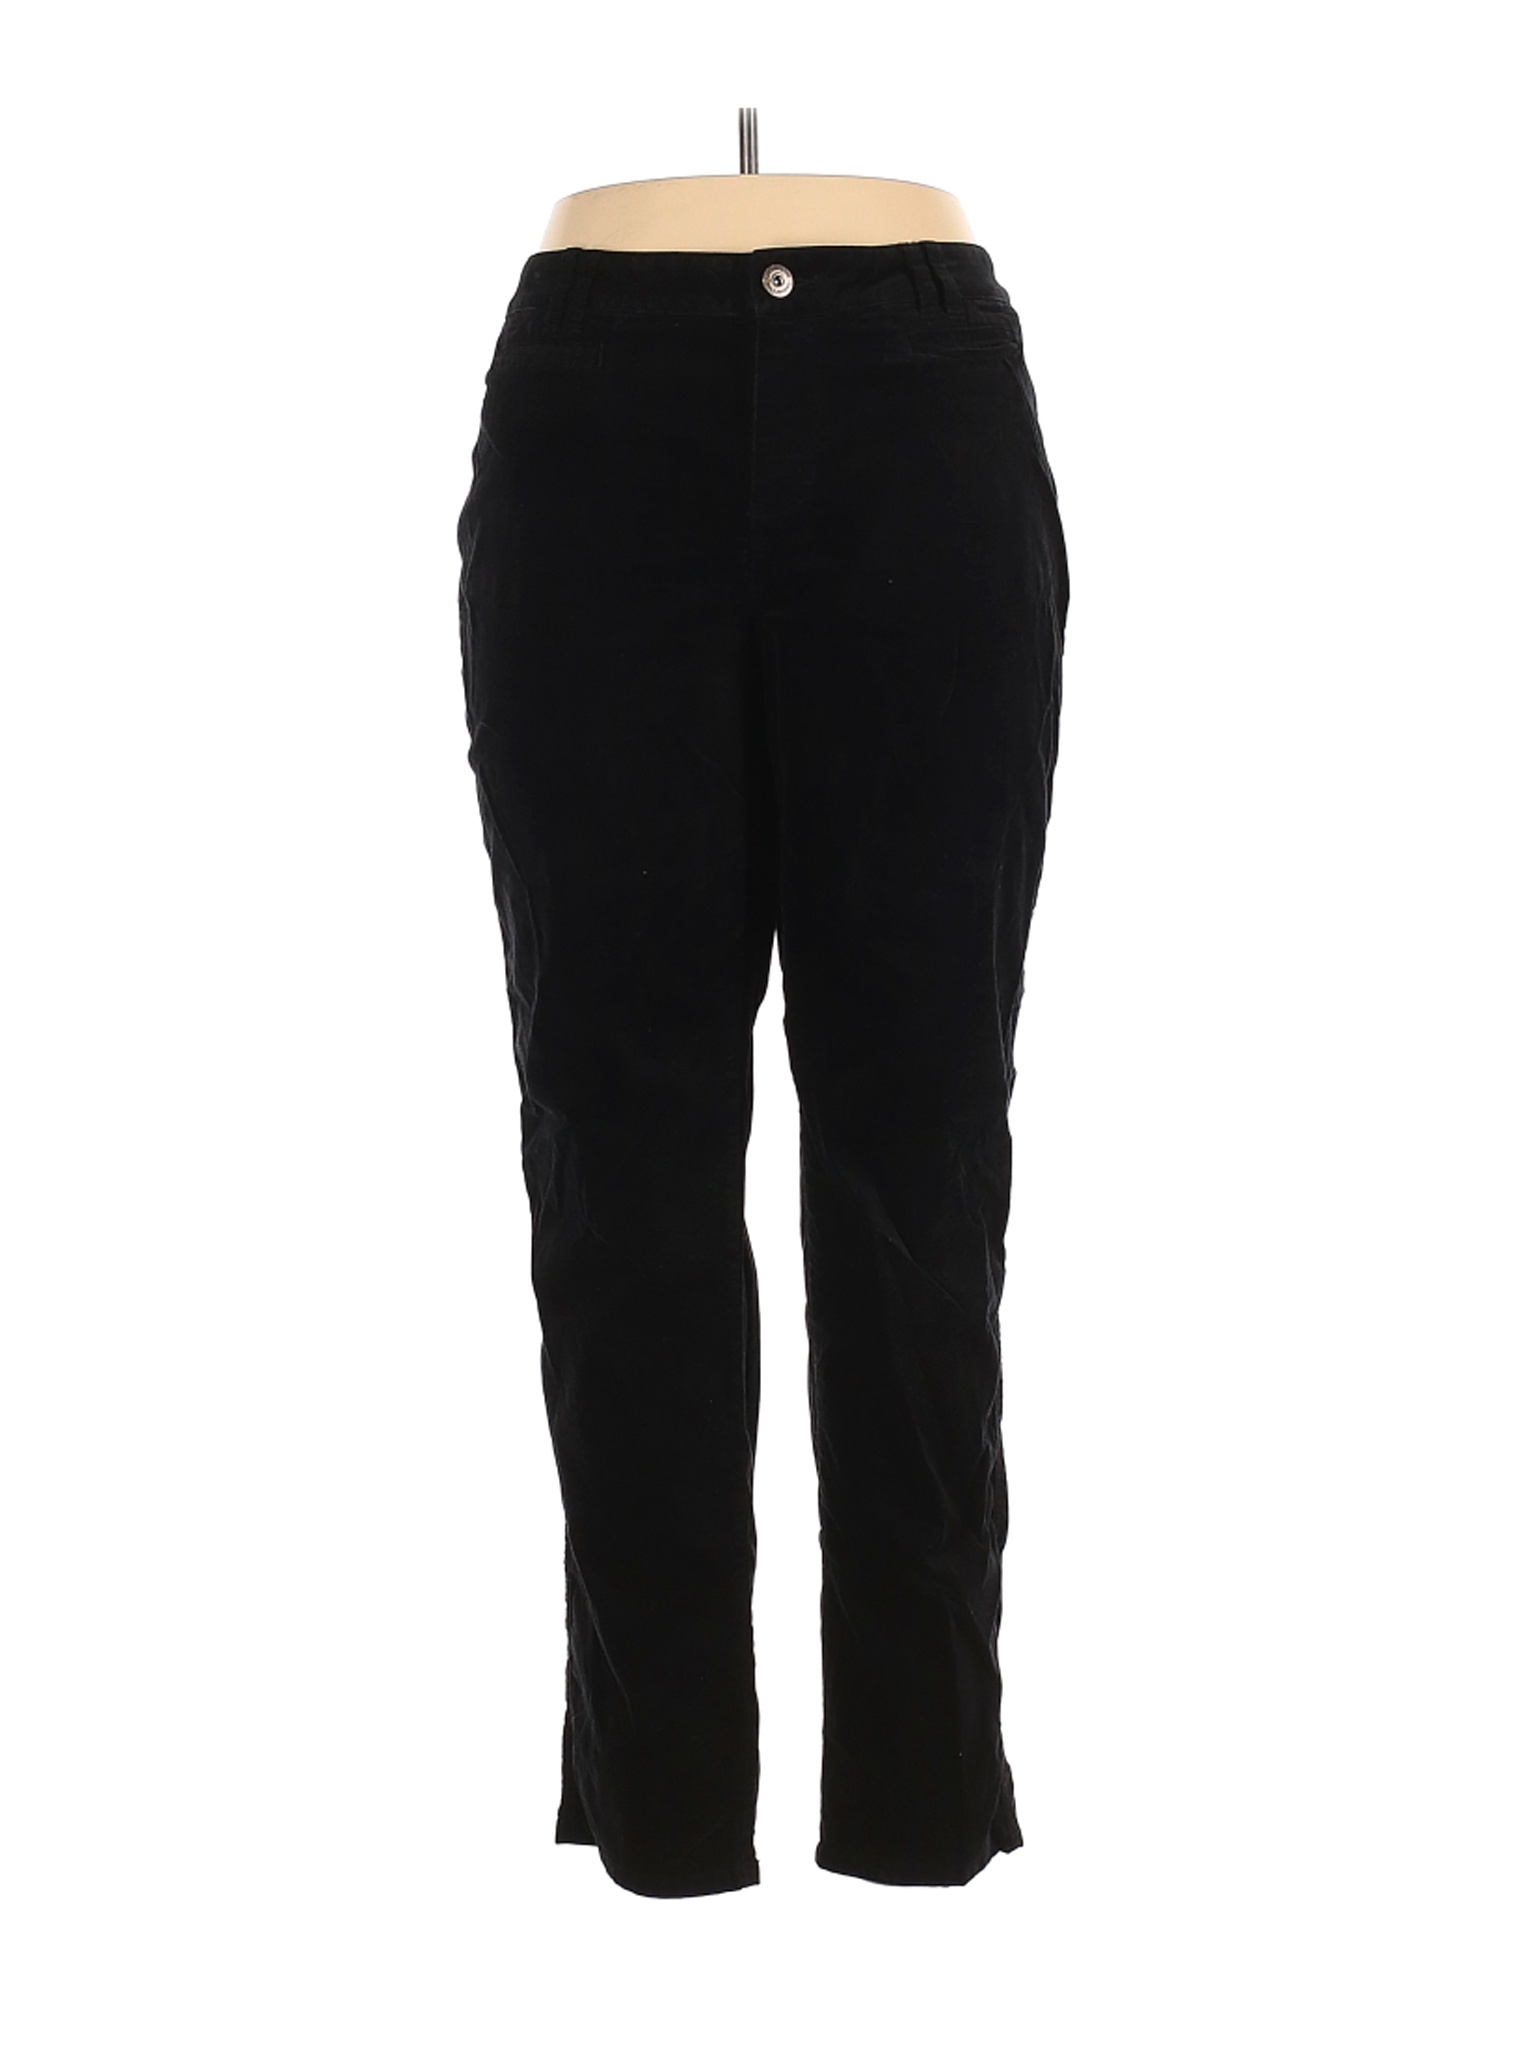 Coldwater Creek Women Black Casual Pants 18 Plus | eBay